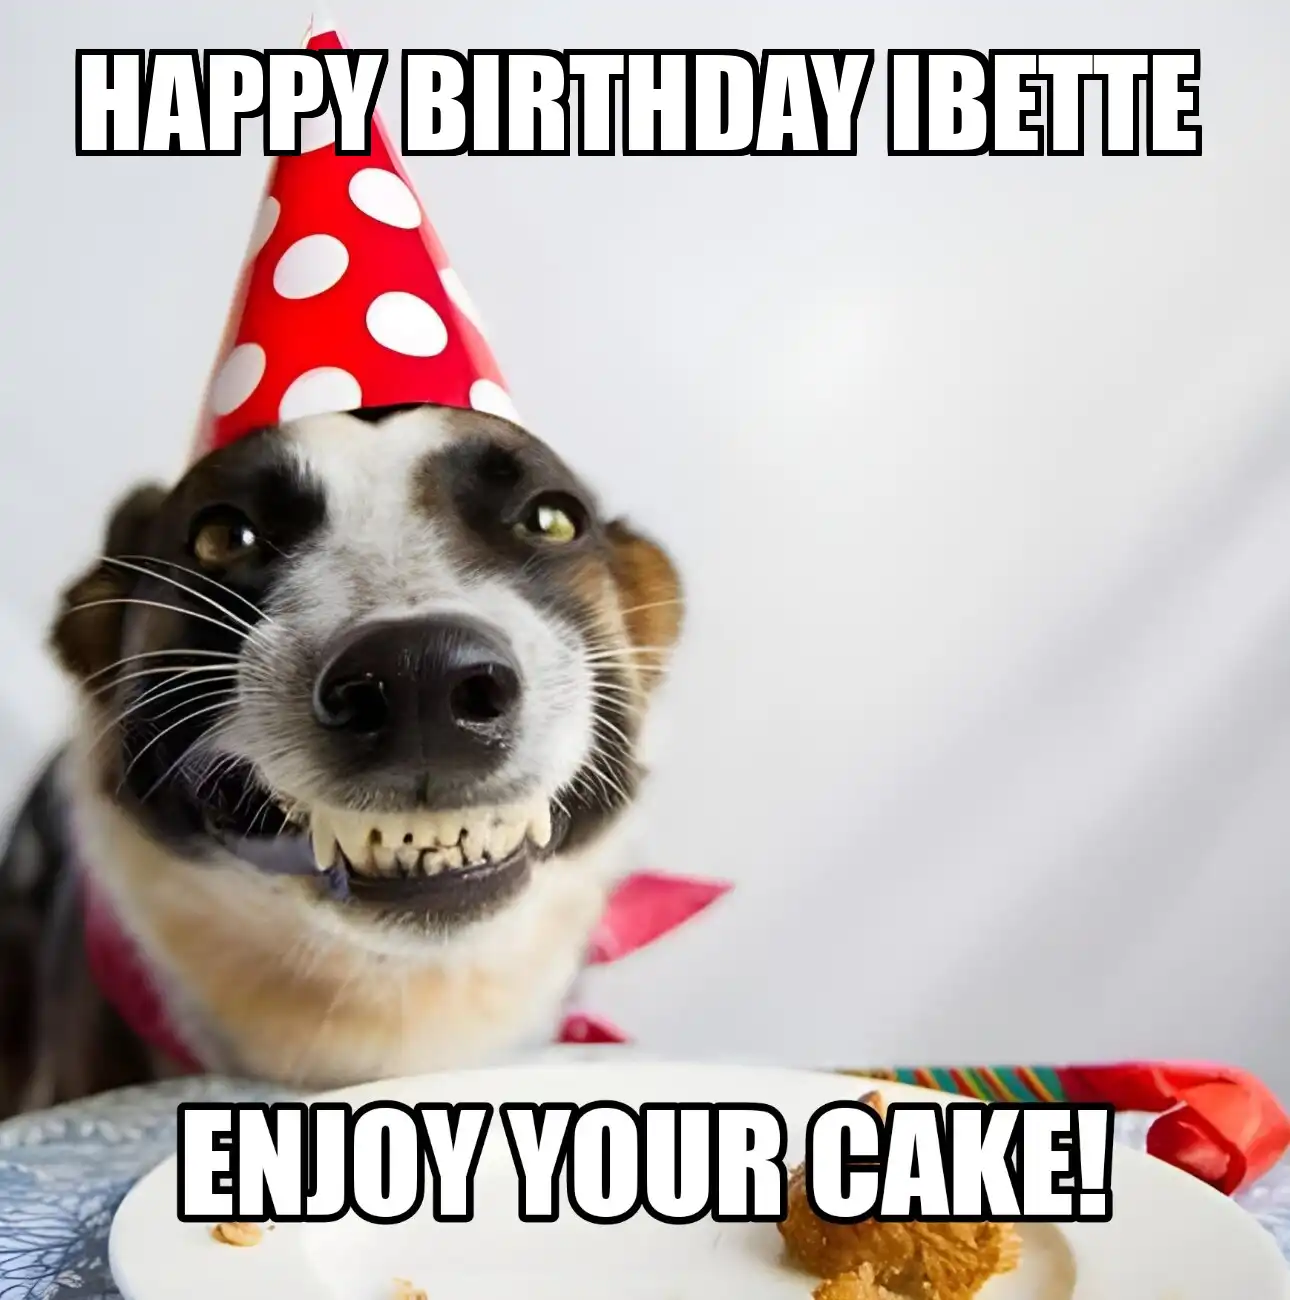 Happy Birthday Ibette Enjoy Your Cake Dog Meme